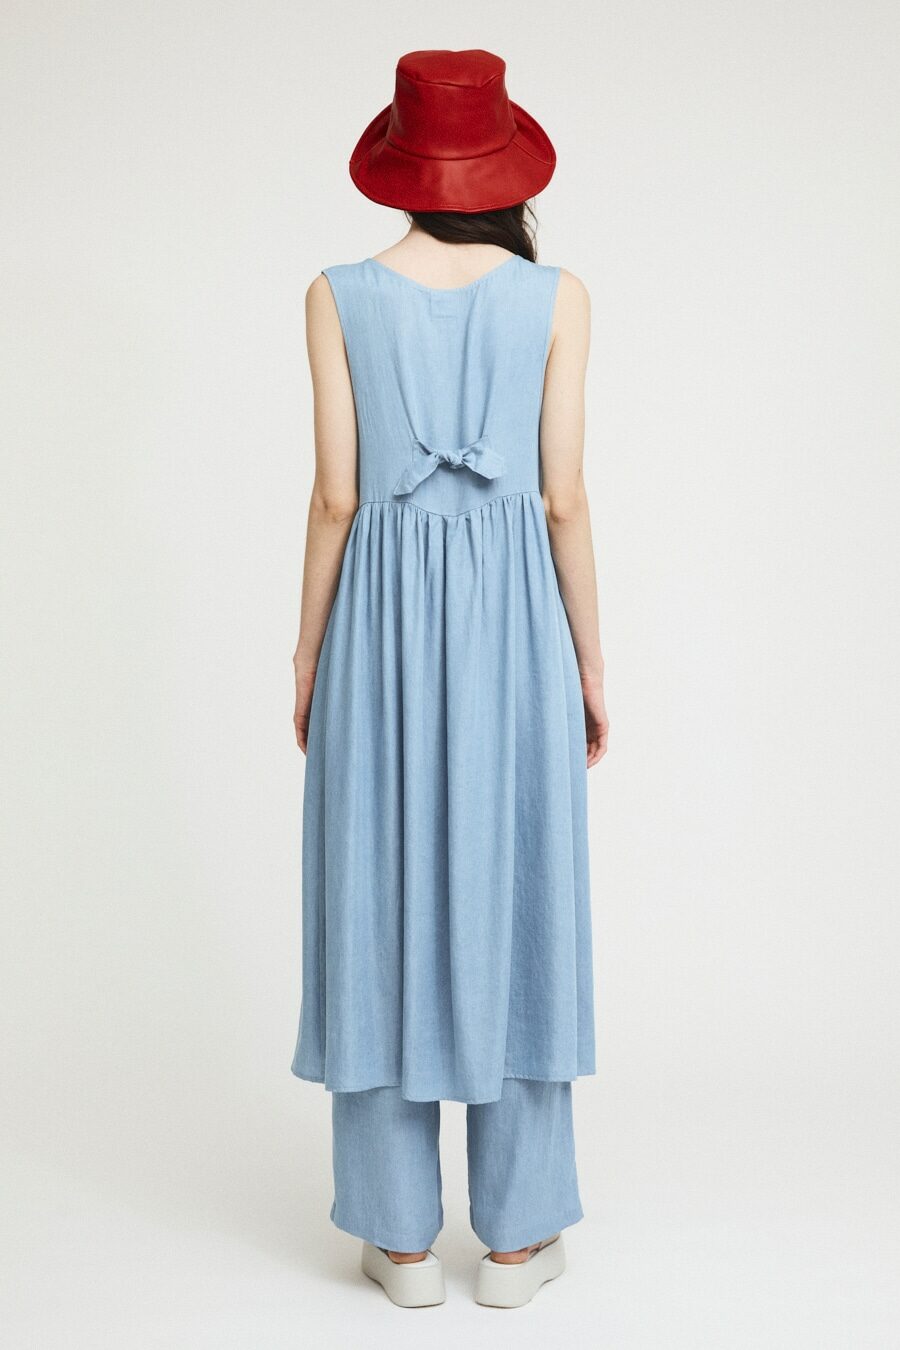 RITA ROW - Tencel Relaxed Dress - Blue 2